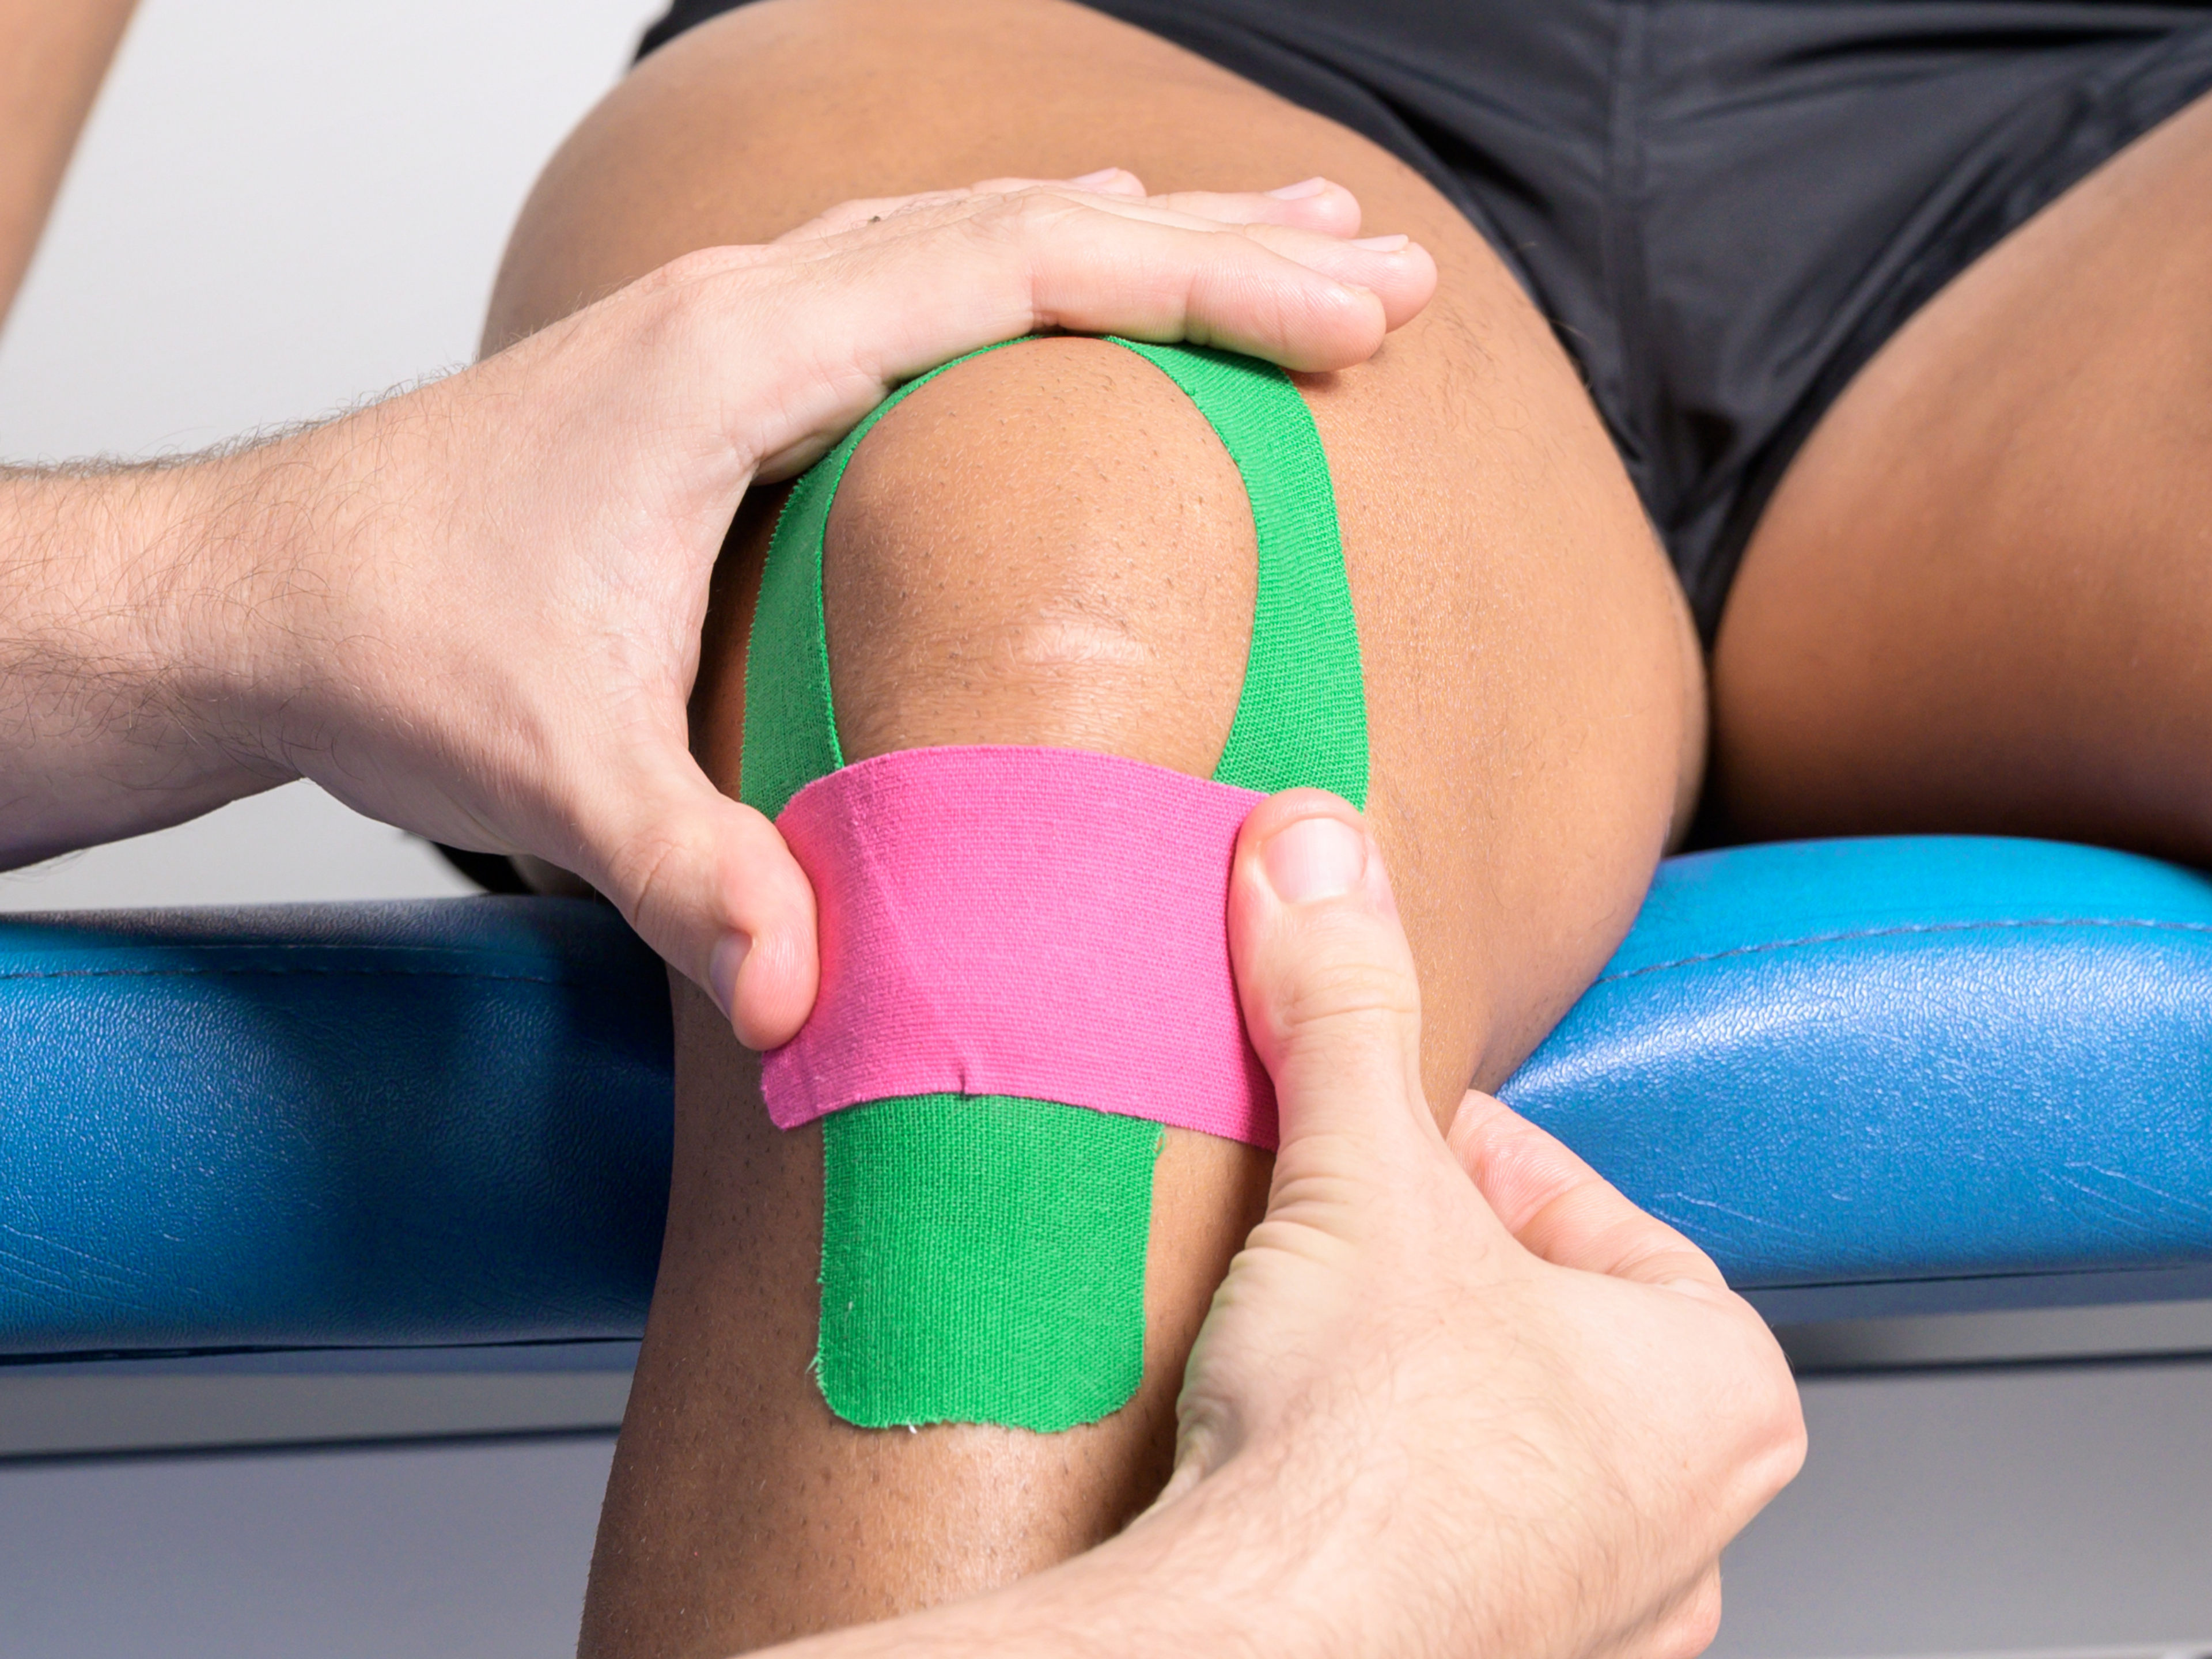 Patellar tendon straps or taping can help reduce patellar tendonitis pain during rehab exercises and sports.